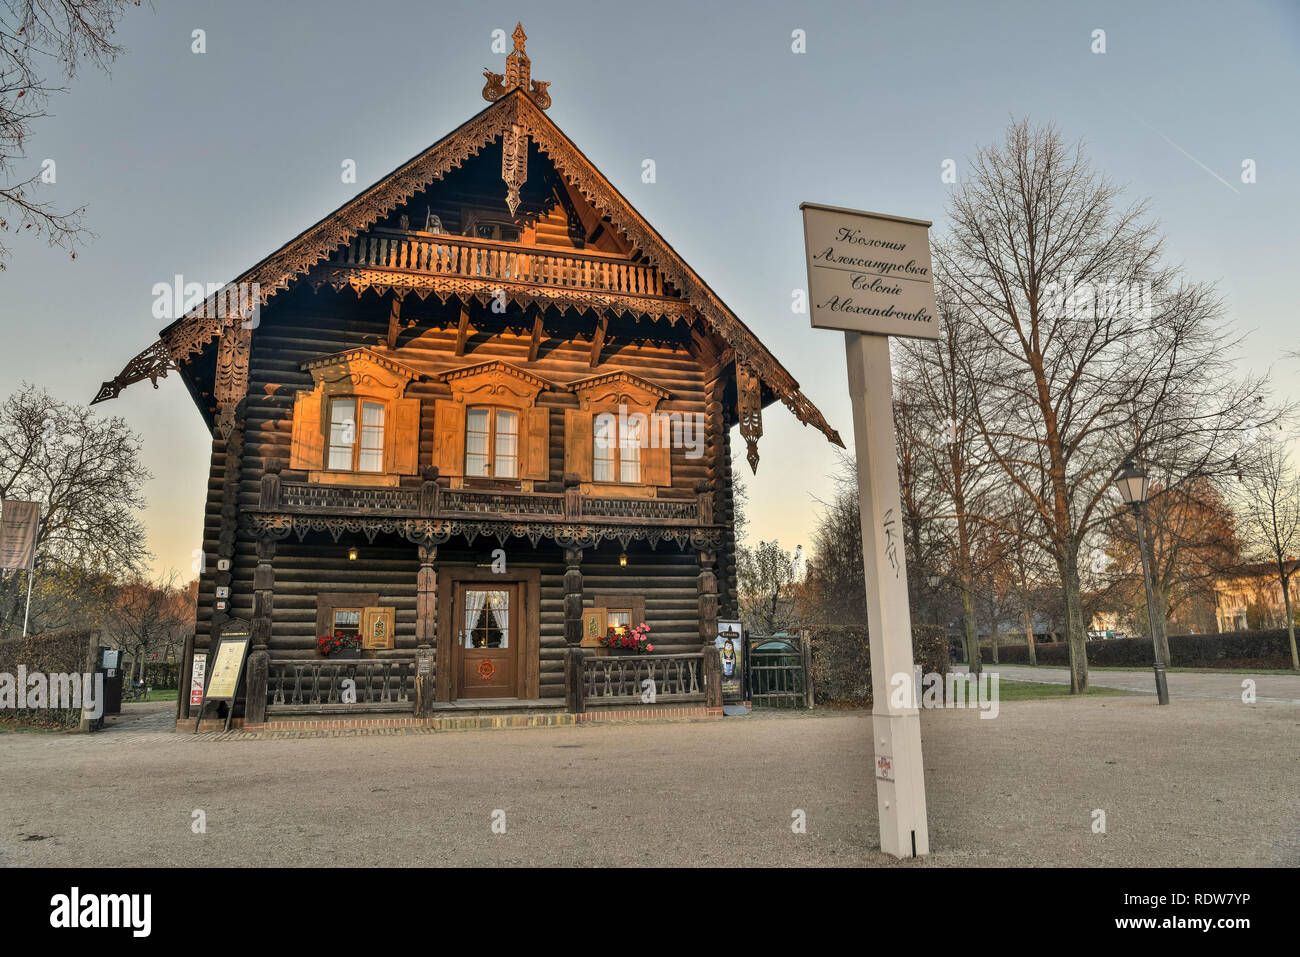 Potsdam, Germany - November 16, 2018. Timber house and Russian colony Alexandrowka sign in Russian neighbourhood Alexandrowka in Potsdam. Stock Photo